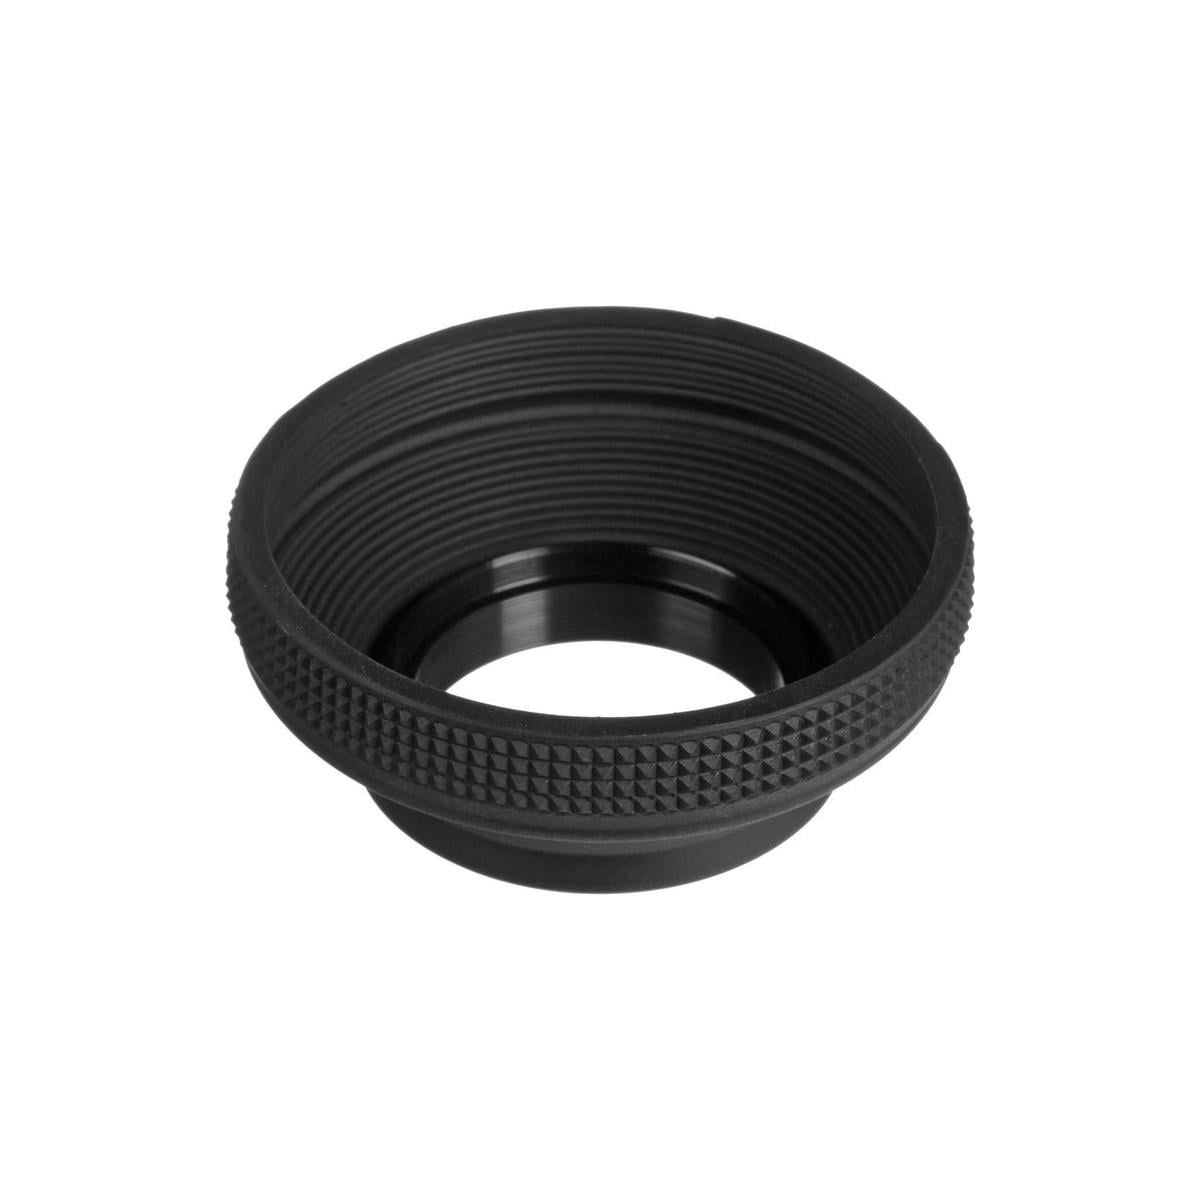 B+W 58mm 900 Collapsible Rubber Lens Hood for Standard/Short Zoom Lenses